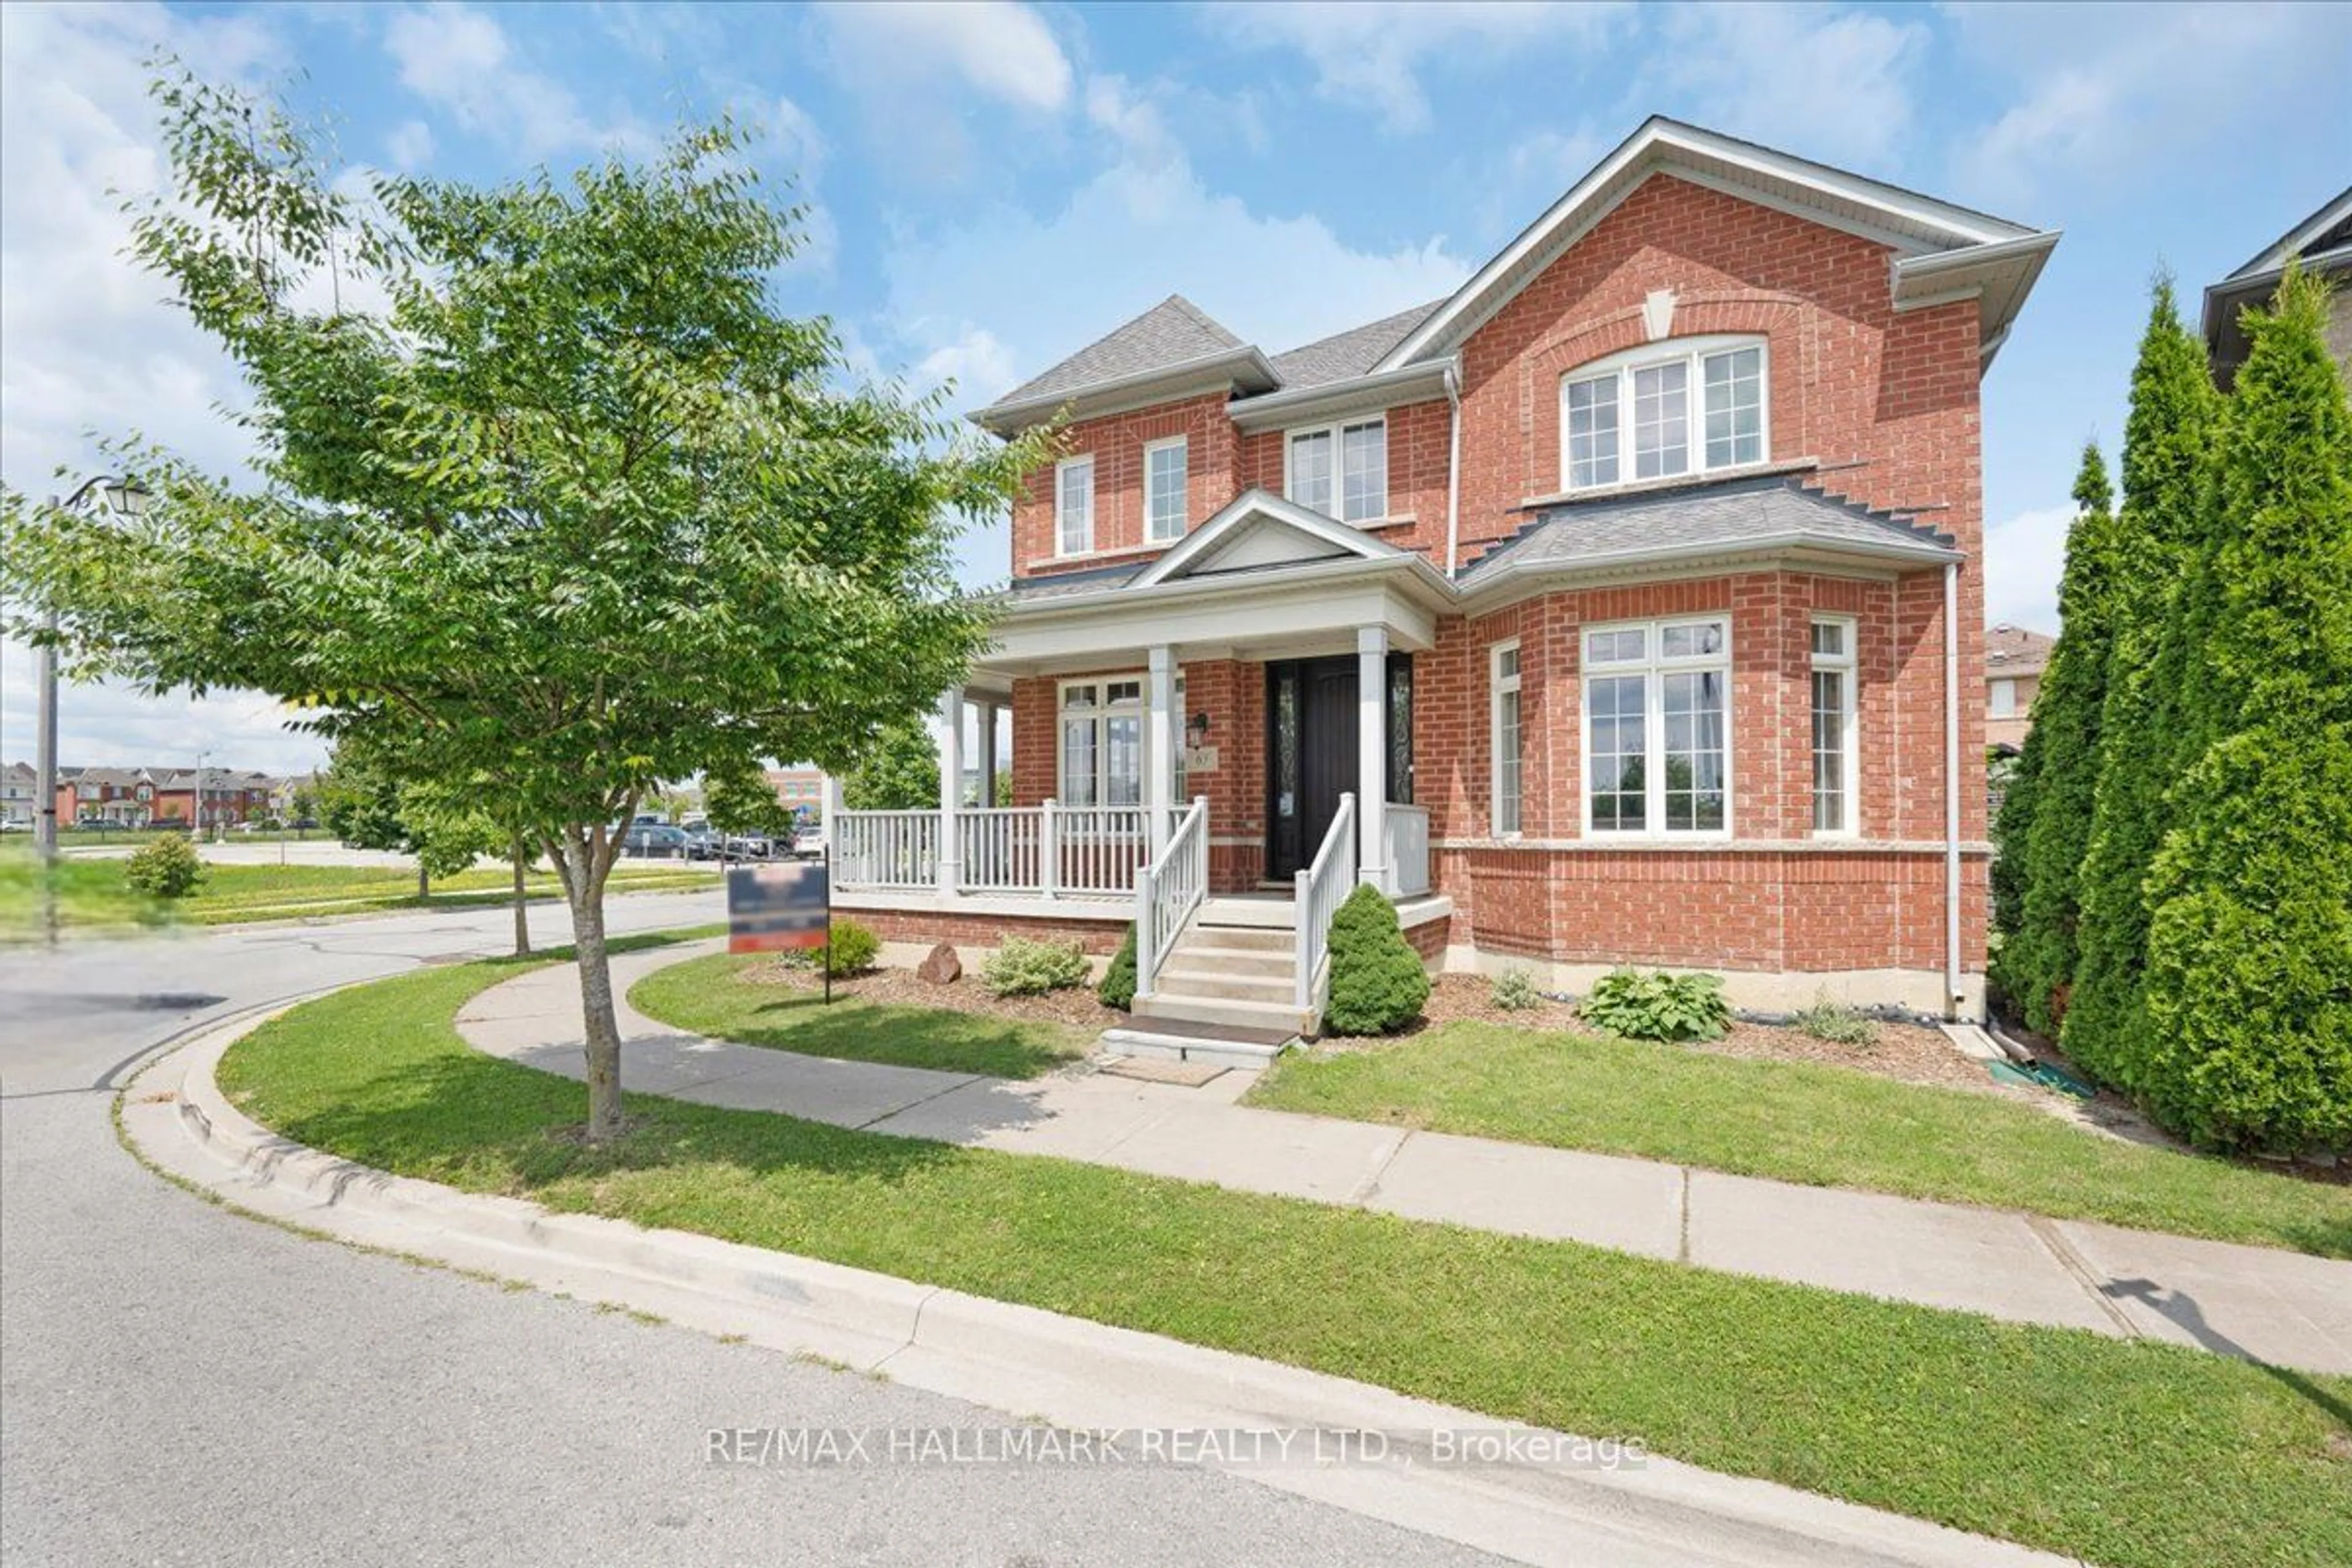 Home with brick exterior material for 65 John Allan Cameron St, Markham Ontario L6B 0P8